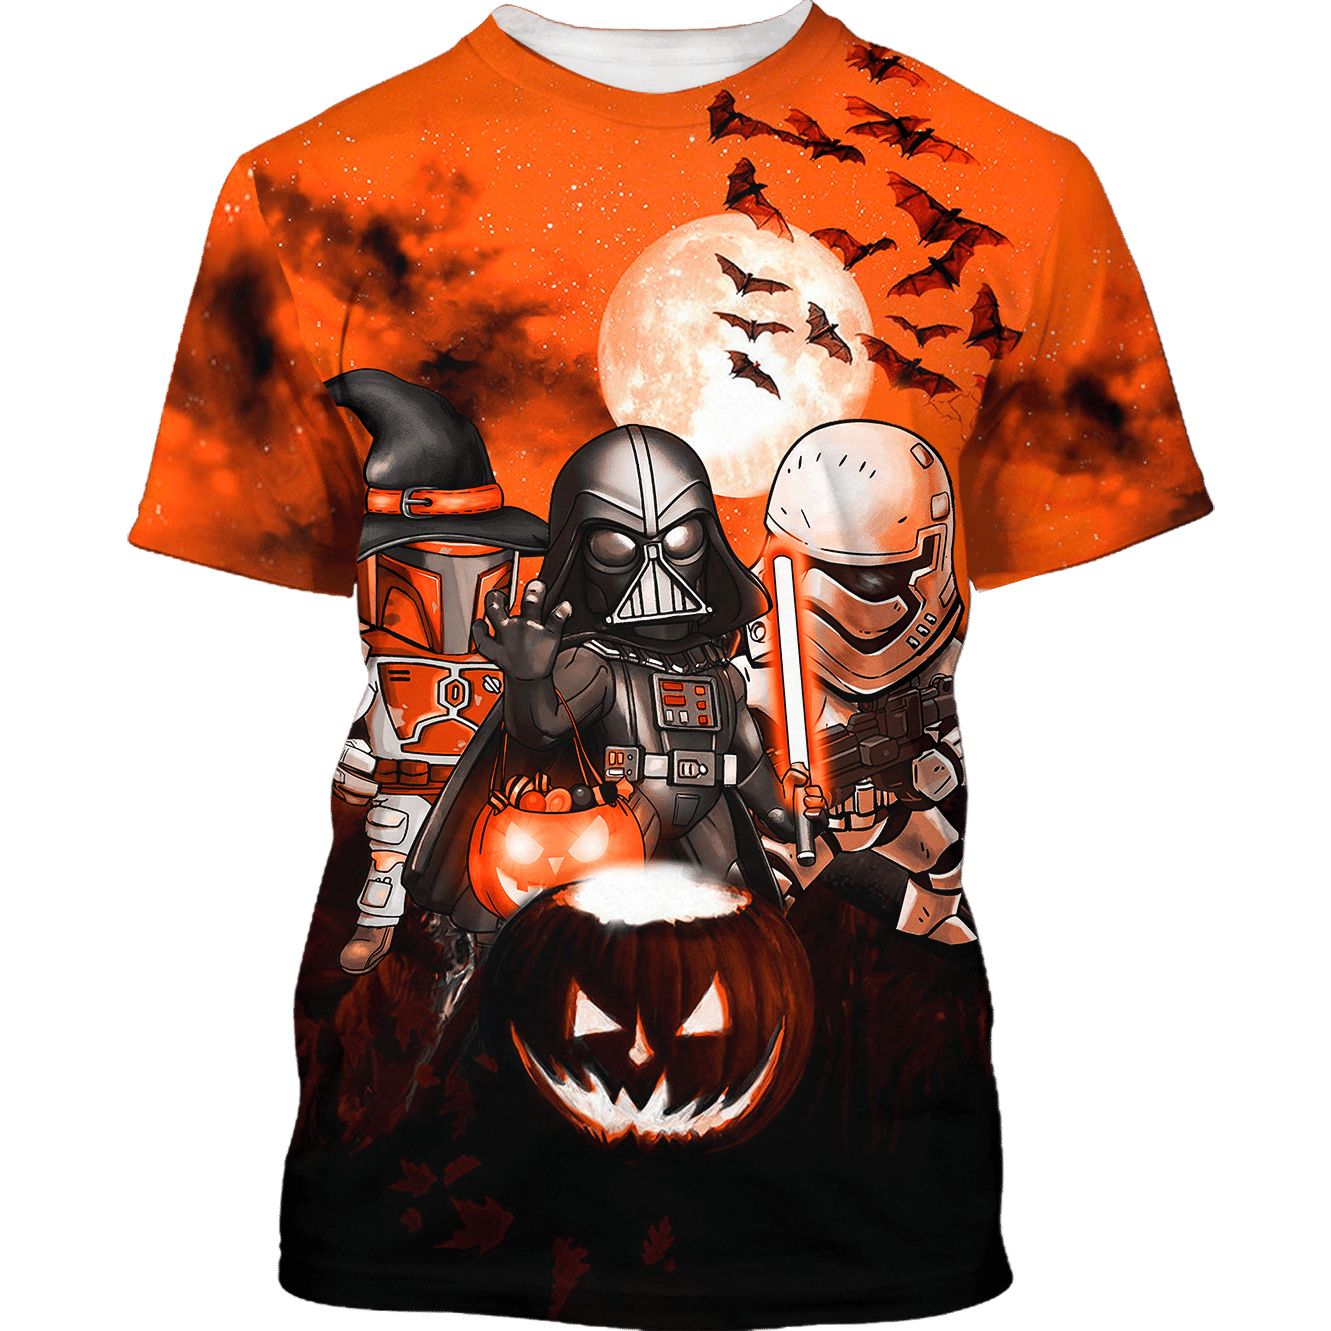 Darth Vader Boba Fett Storm Trooper Halloween shirt and hoodie 1